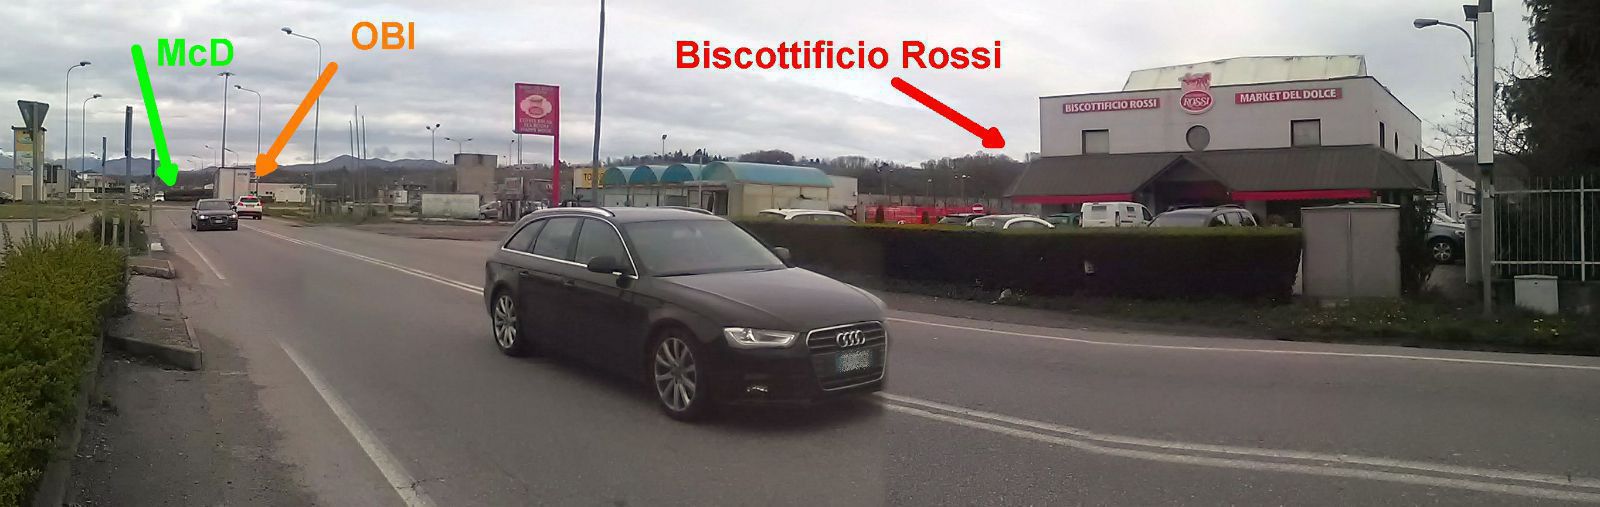 McD_Romagnano-EntrataSud-0-biscottificio Rossi.jpg